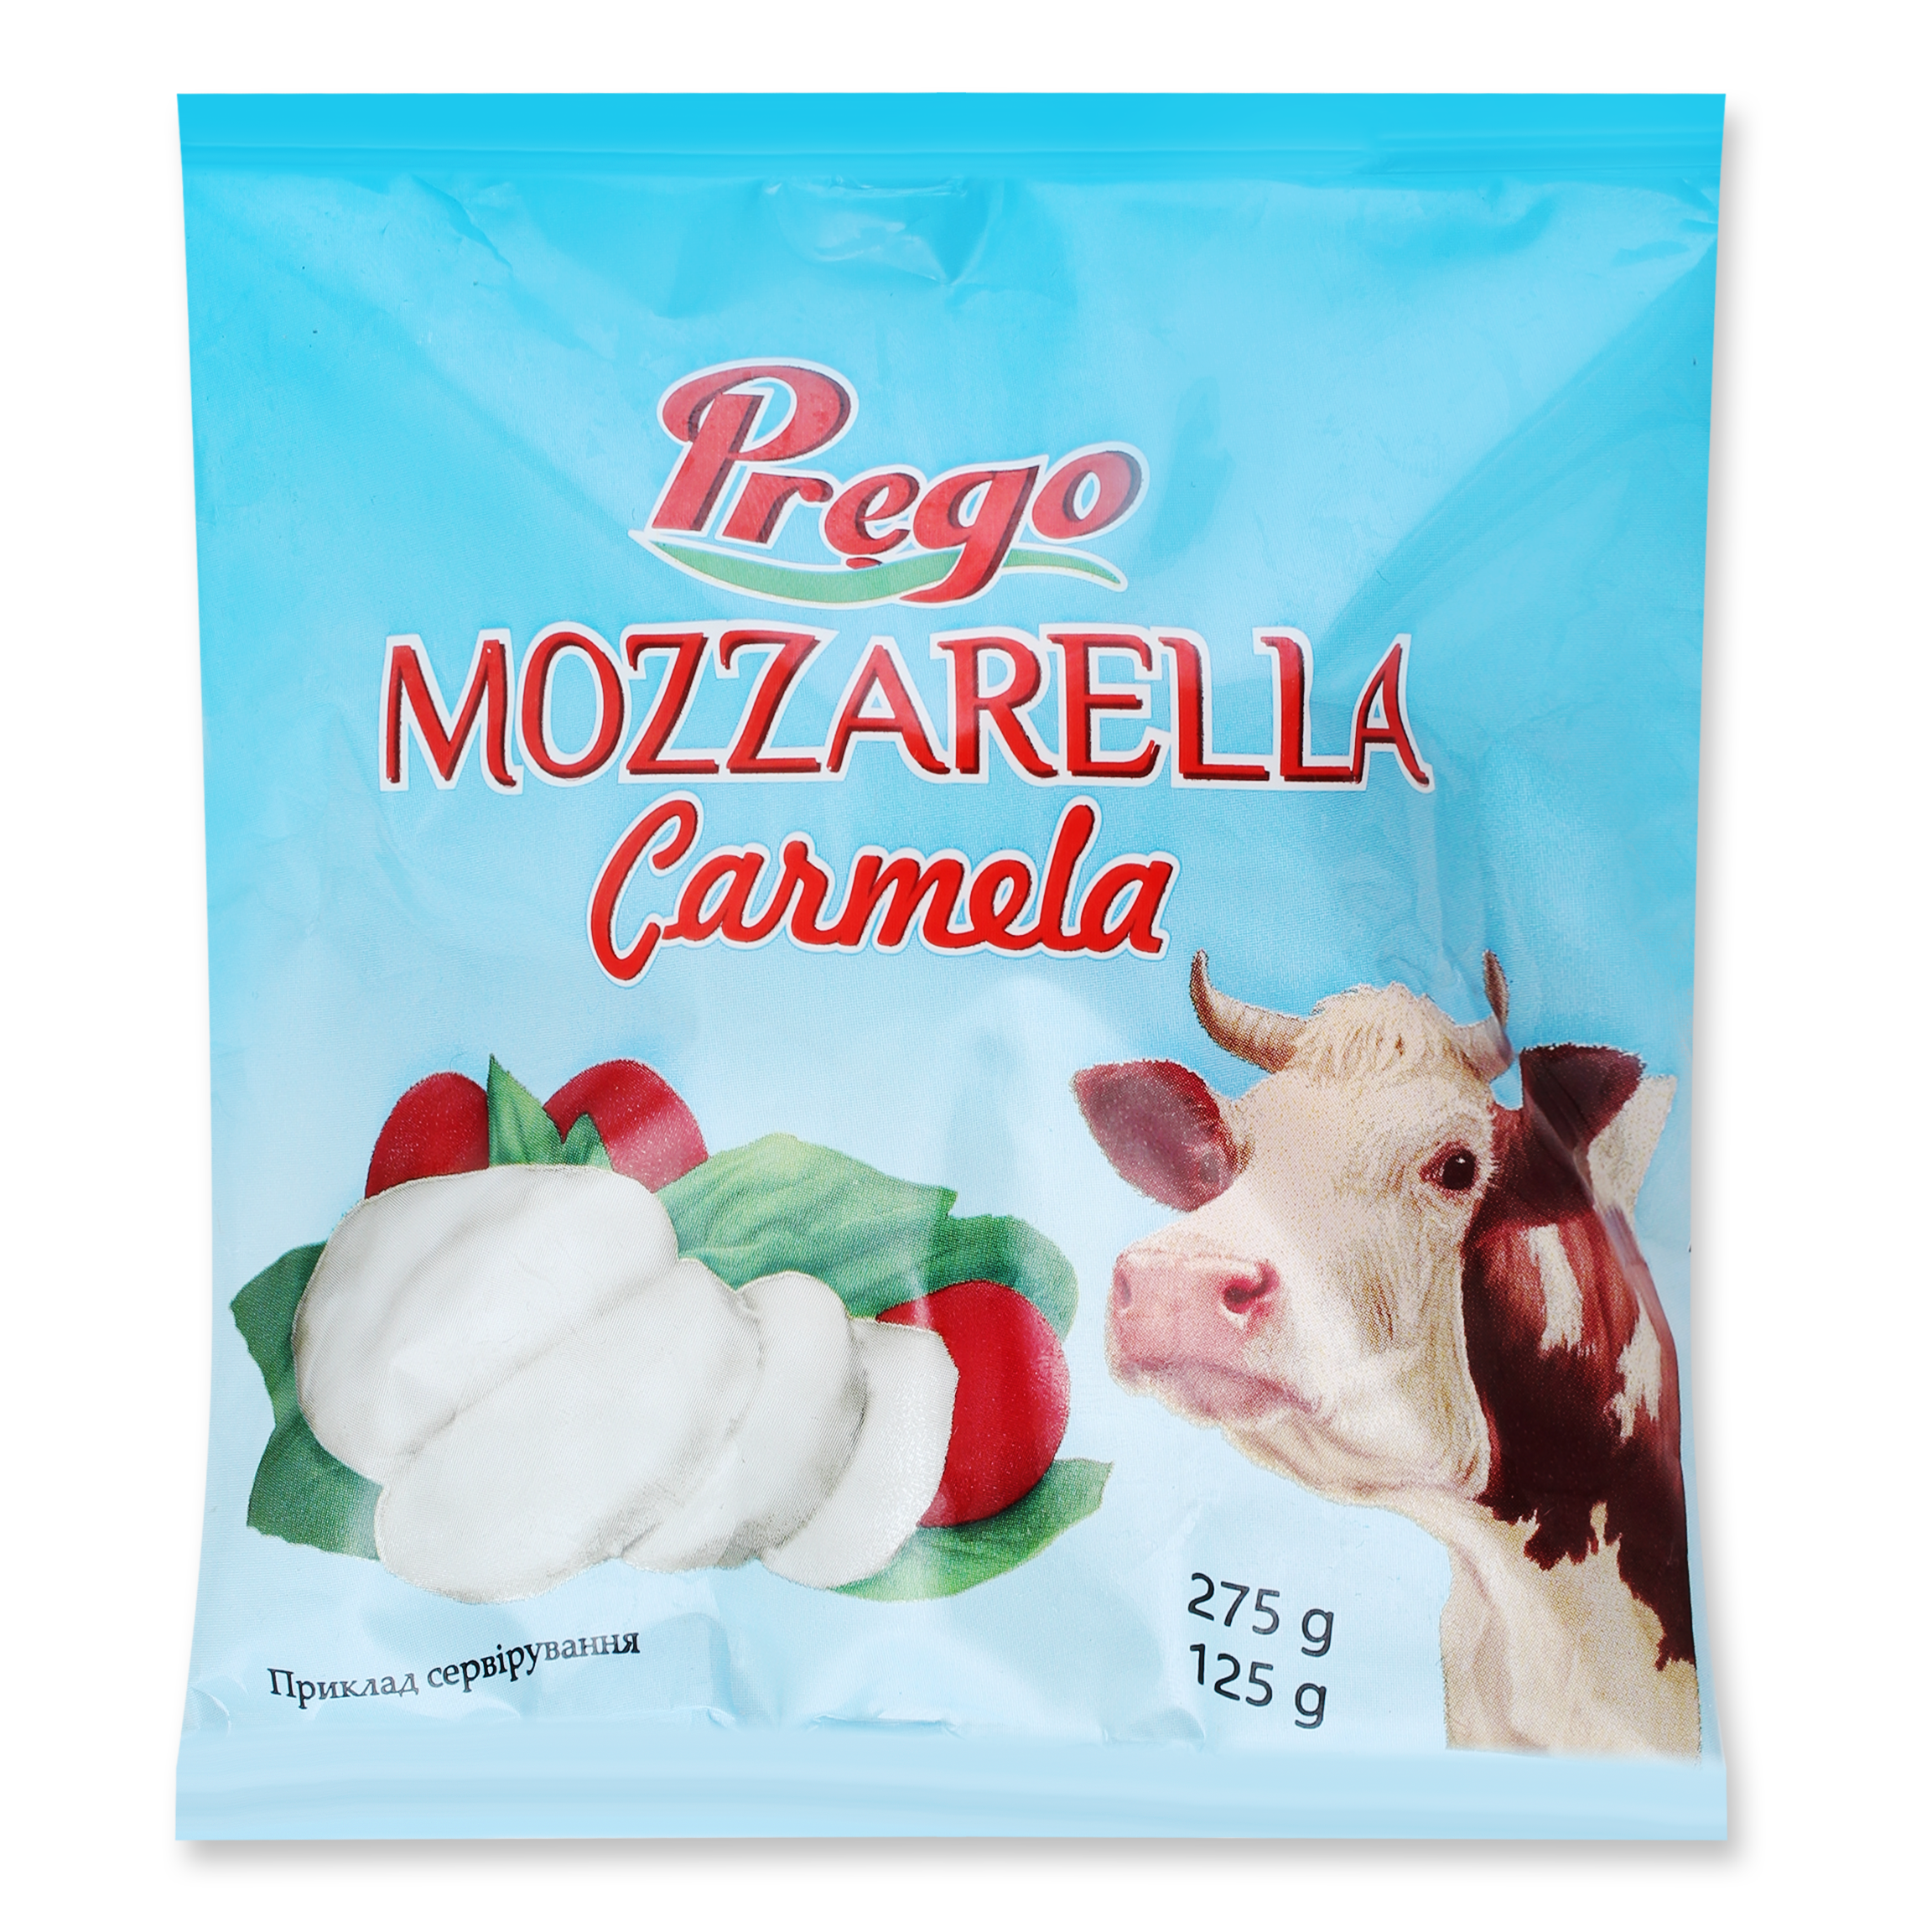 Prego Mozzarella Carmela Pickled Cheese 45% 275g